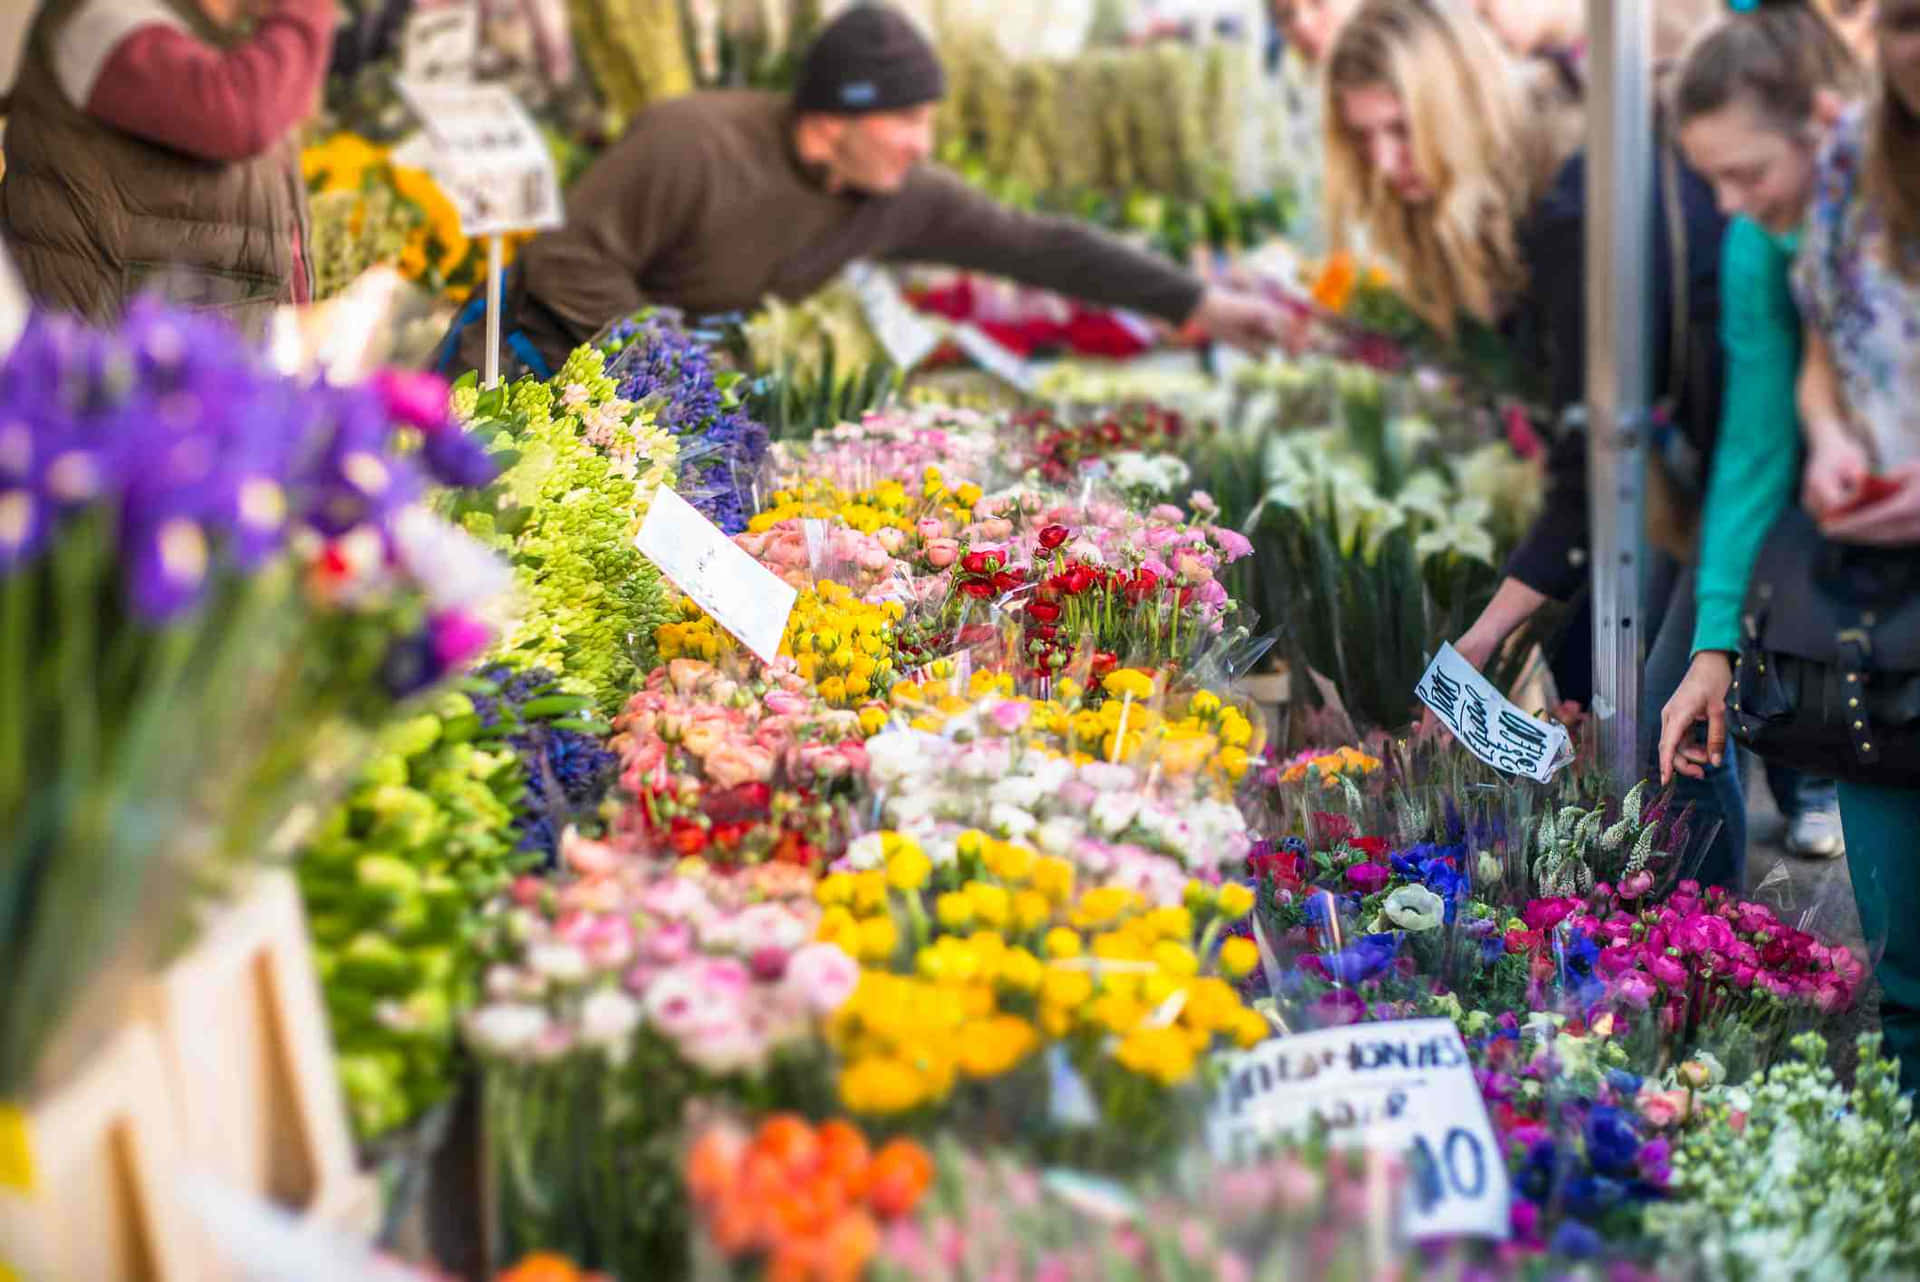 A bustling flower market filled with vibrant blooms Wallpaper